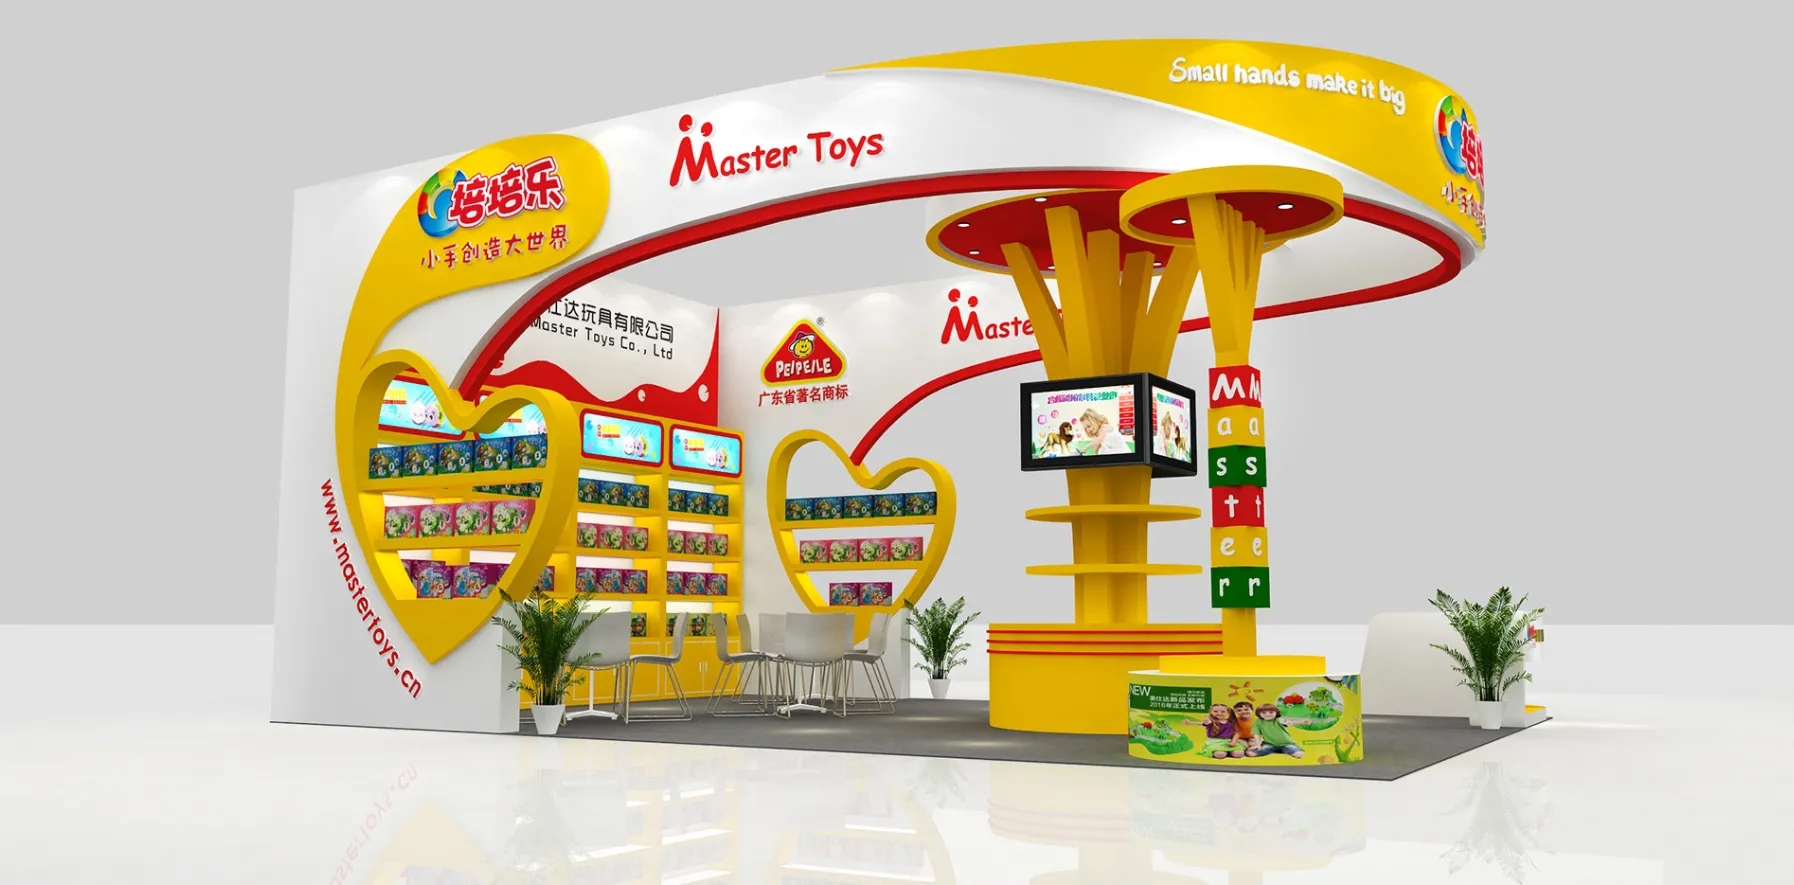 A香港国际玩具展览会 (HONG KONG TOYS & GAMES FAIR)1月8日-11日